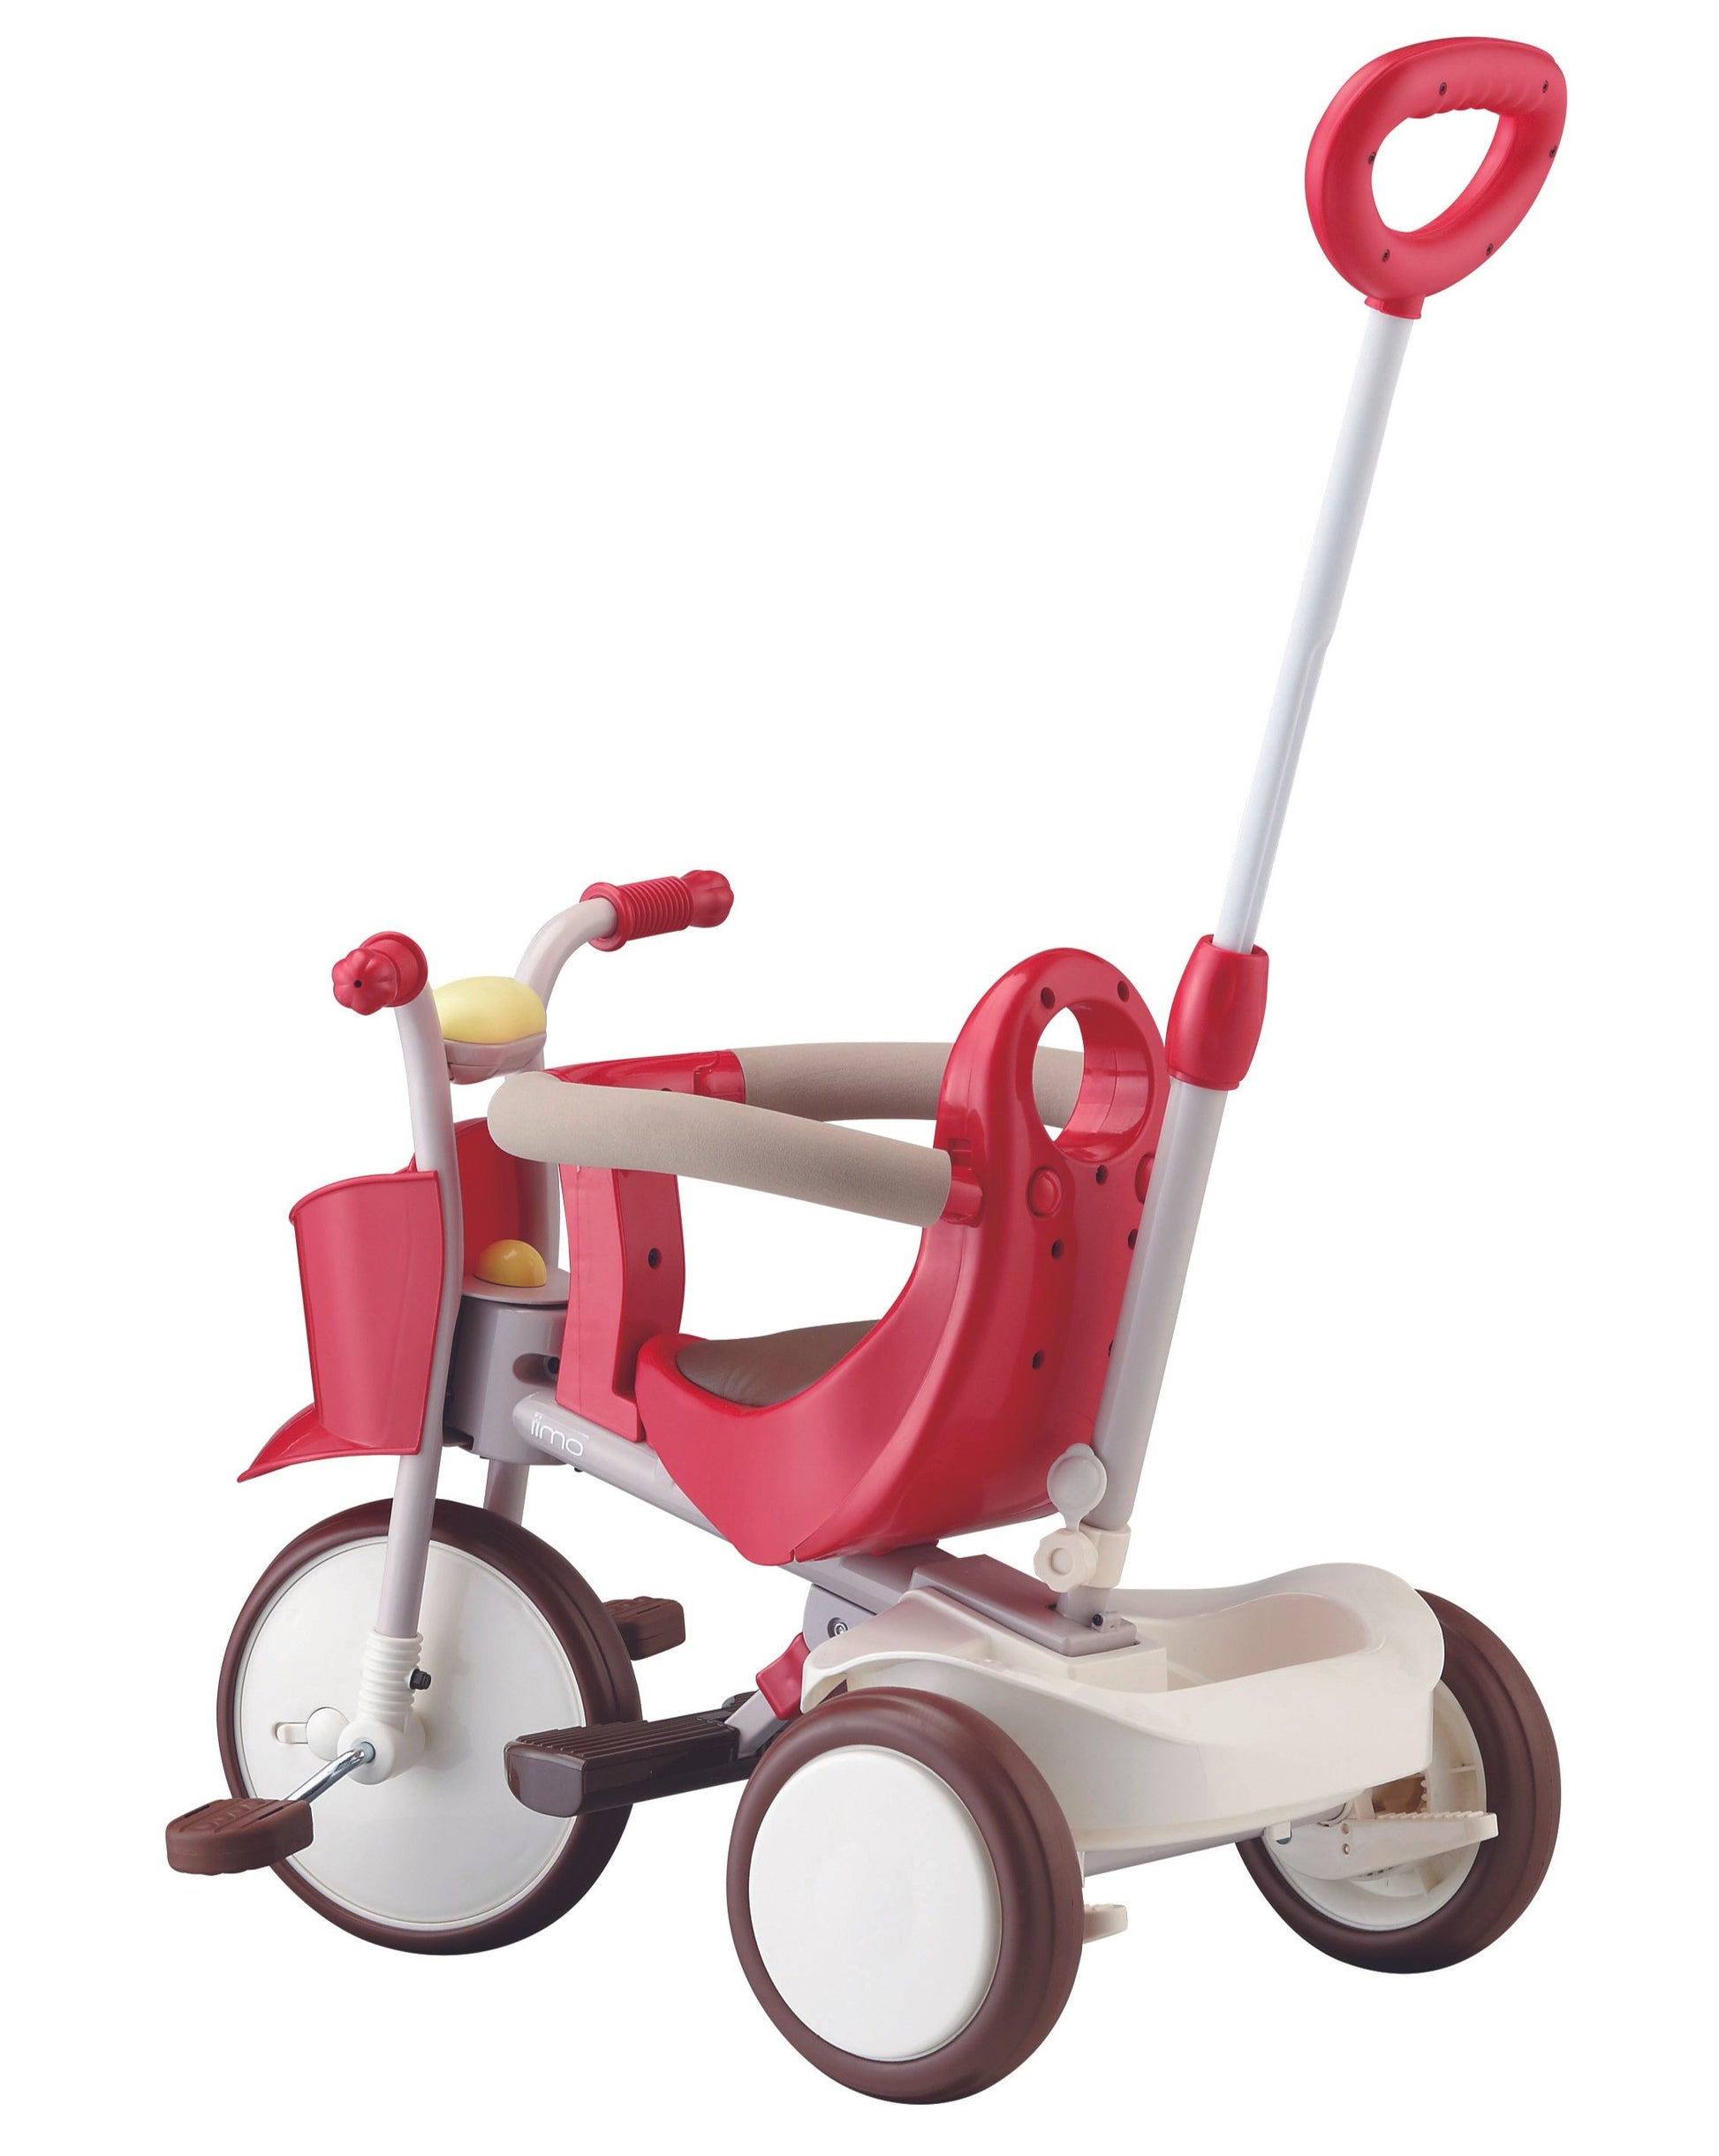 IIMO-Tricycle-Vital Red 1